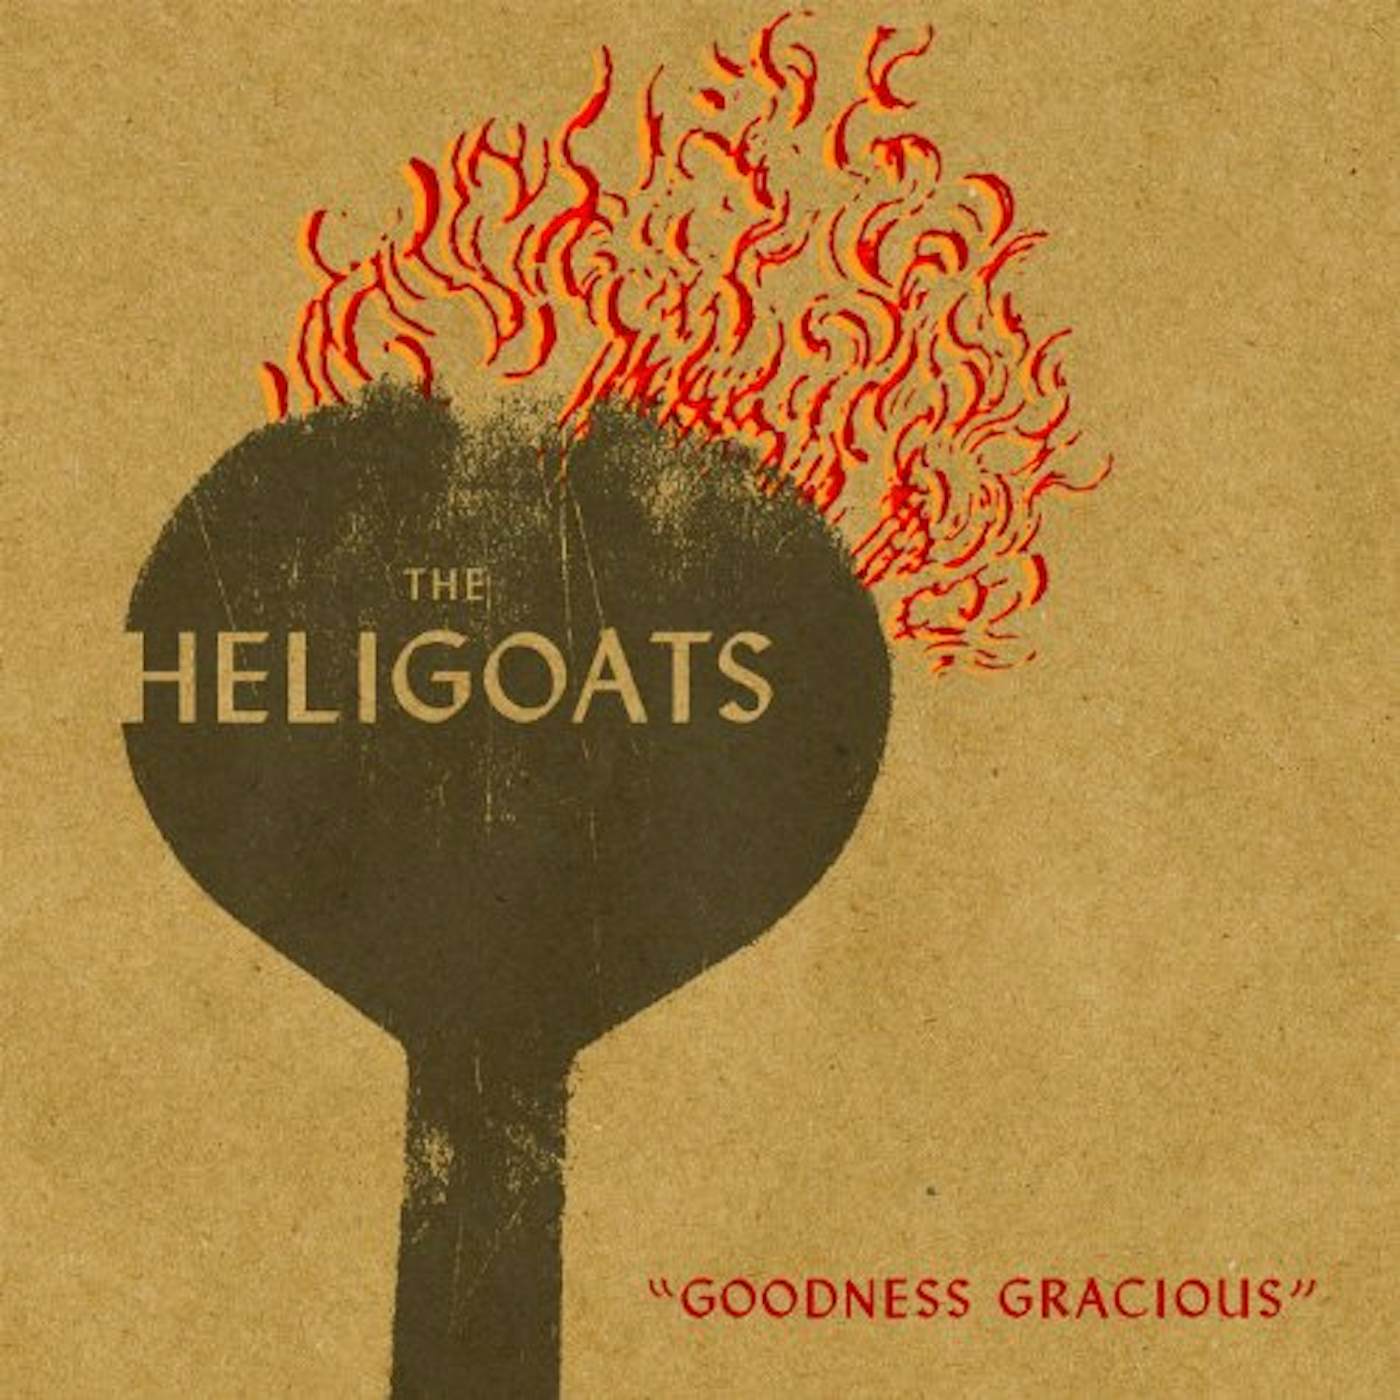 The Heligoats Goodness Gracious Vinyl Record